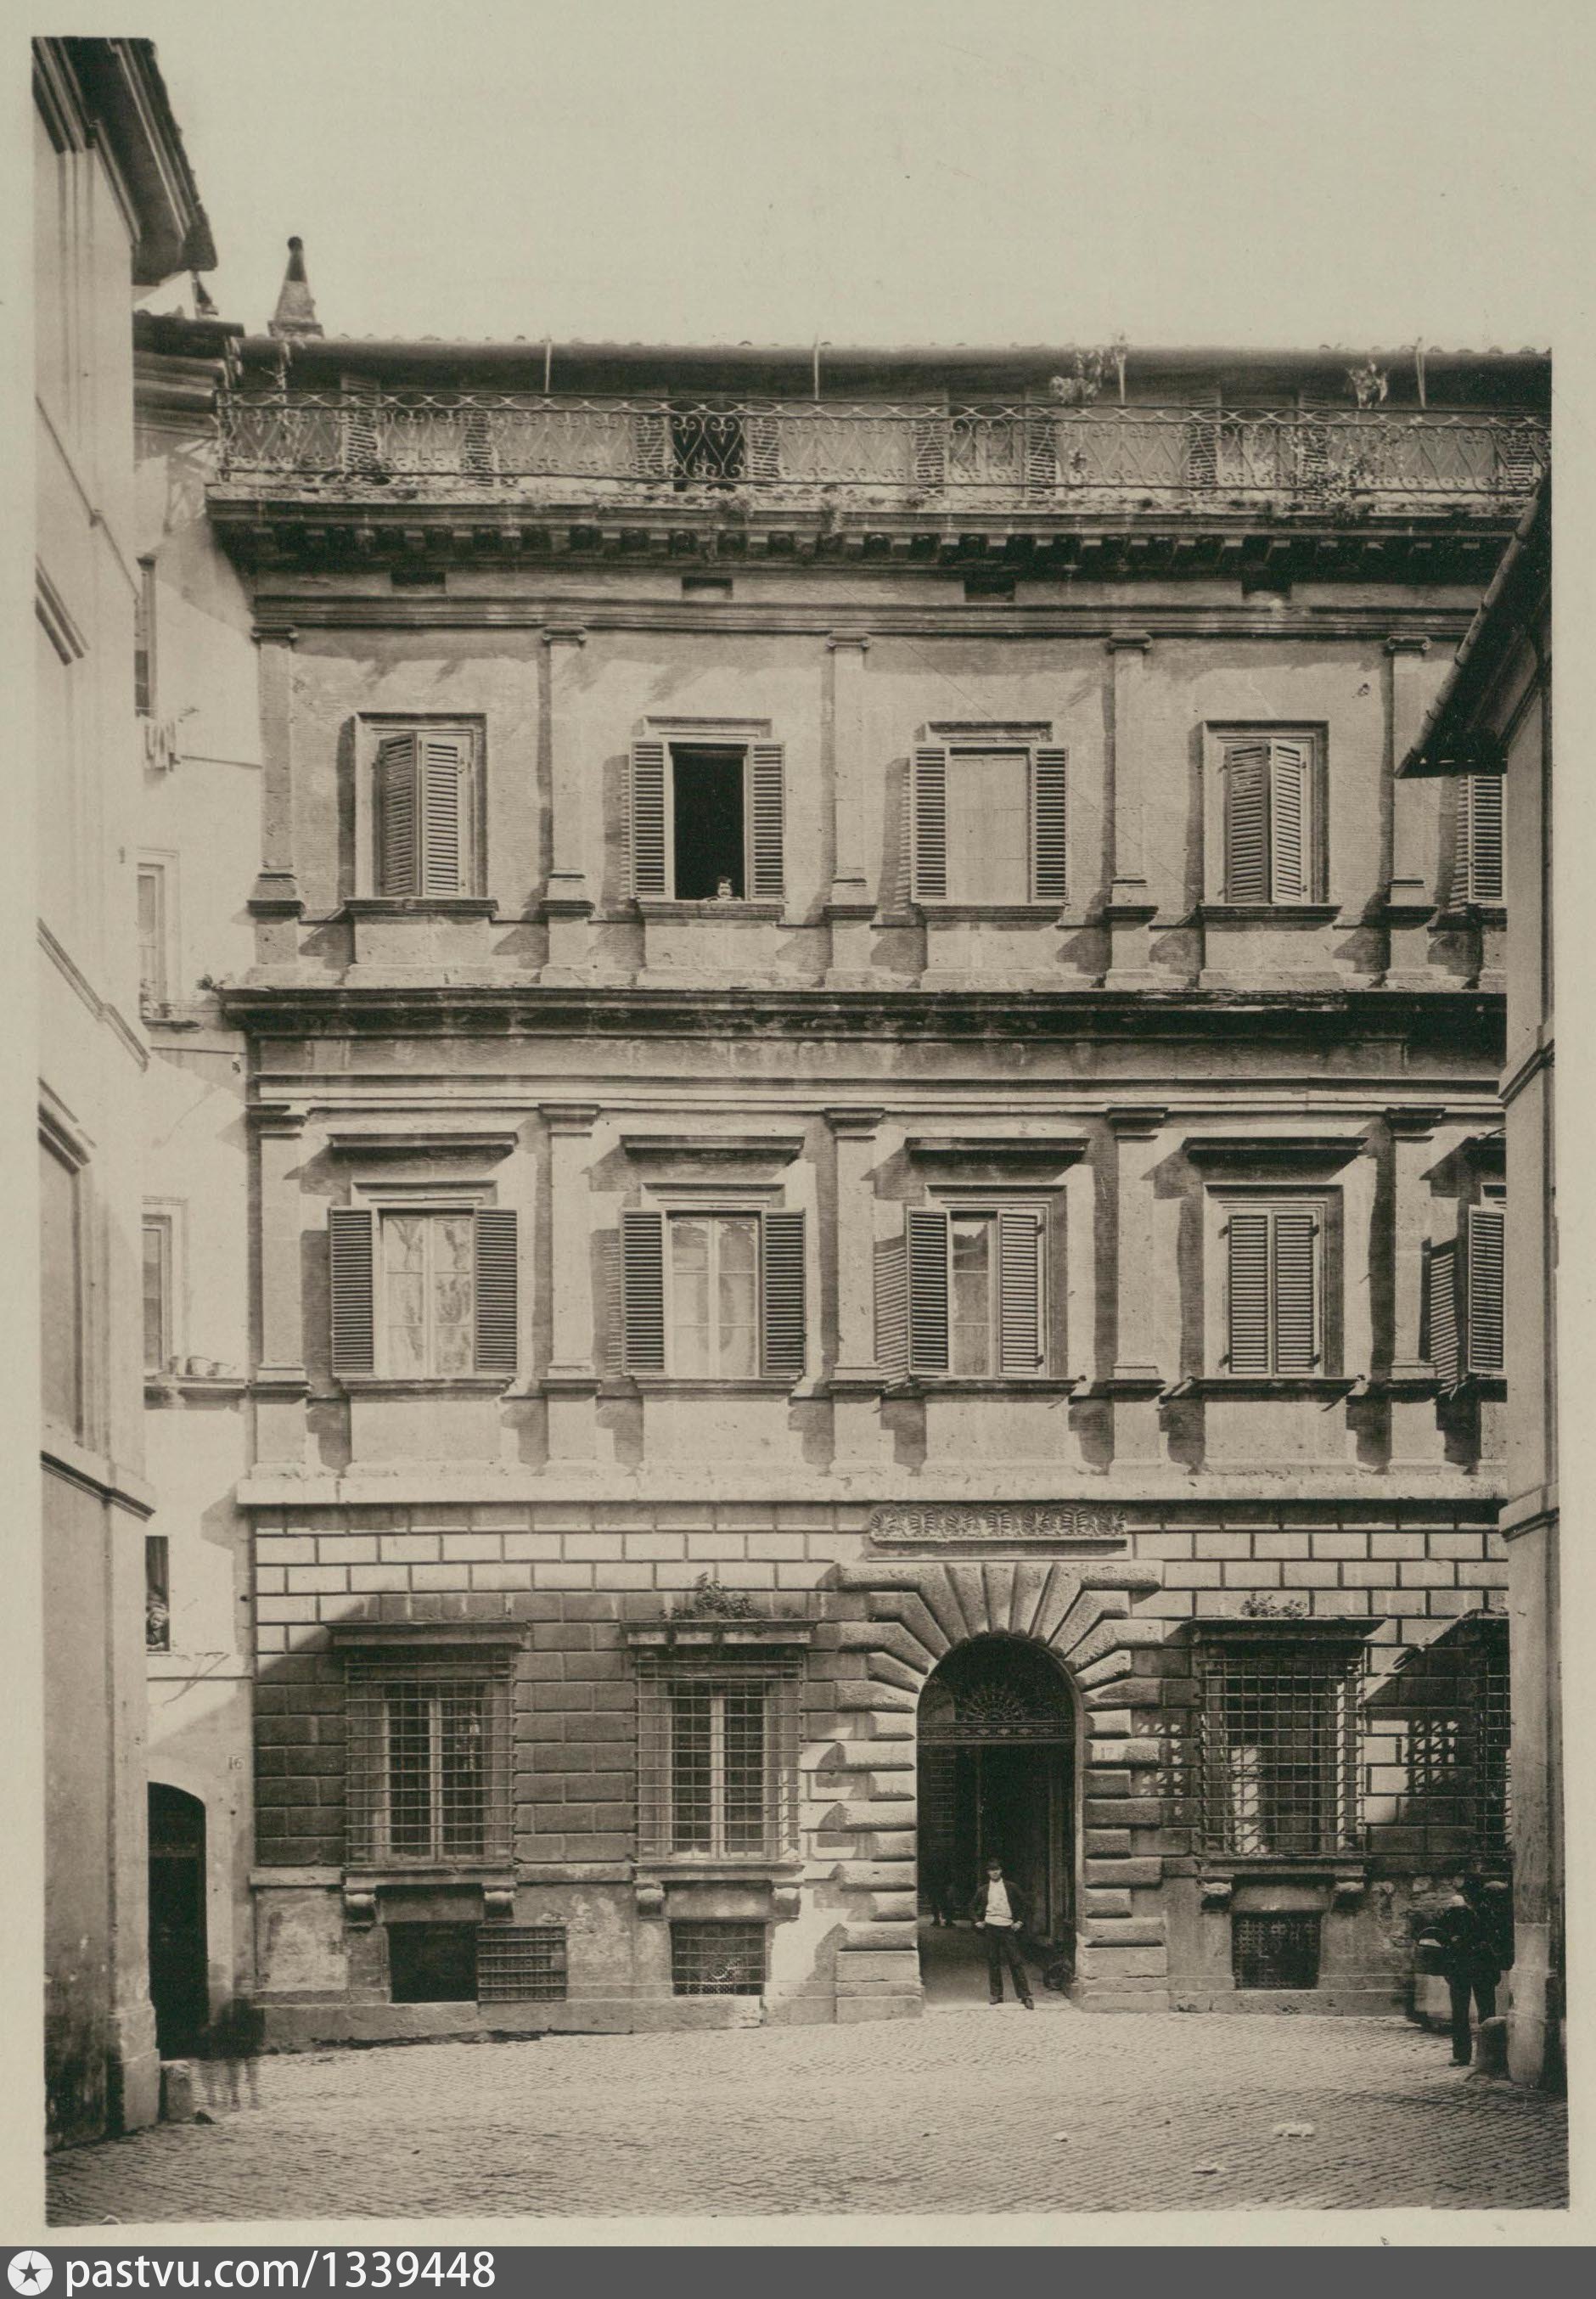 Palazzo Ossoli